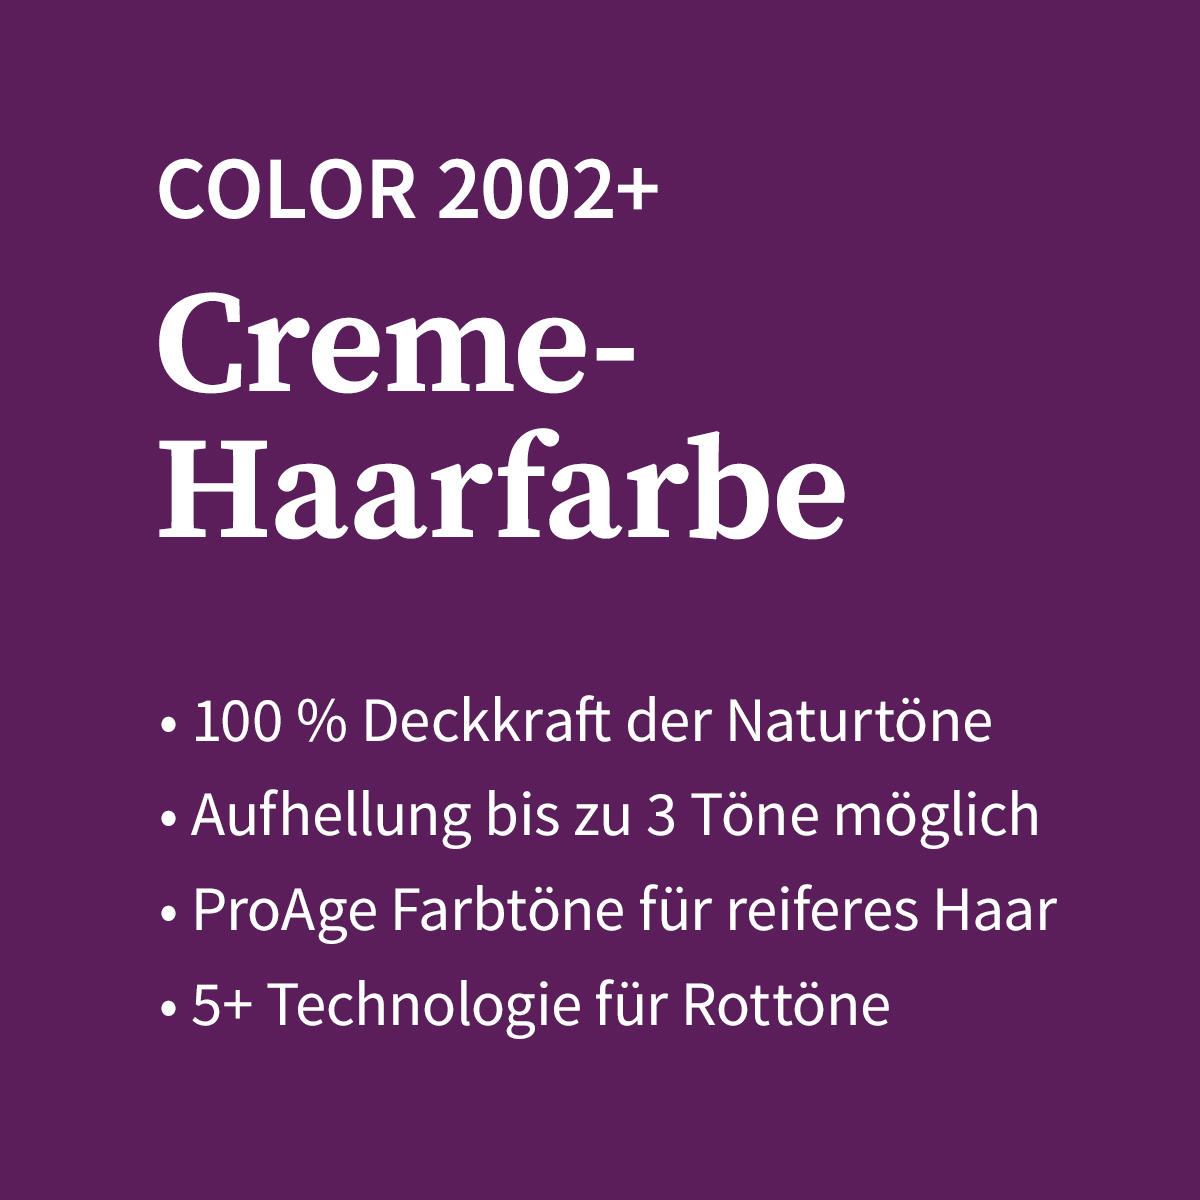 Basler Color 2002+ Cremehaarfarbe 6/6 dunkelblond violett, Tube 60 ml - 4